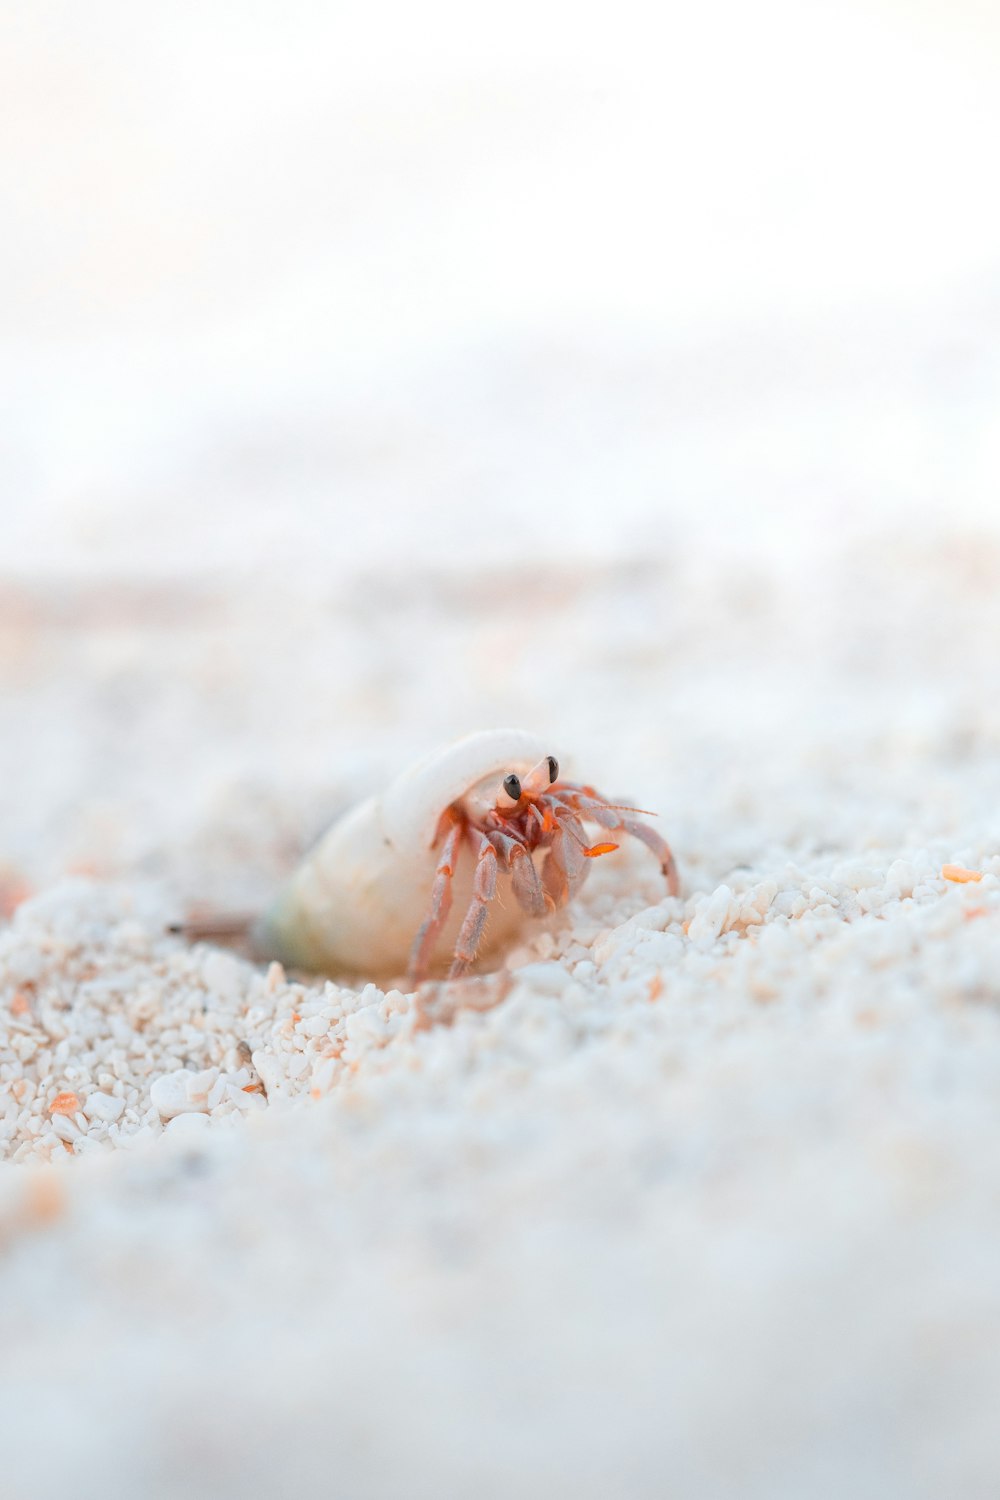 brown crab on white sand during daytime